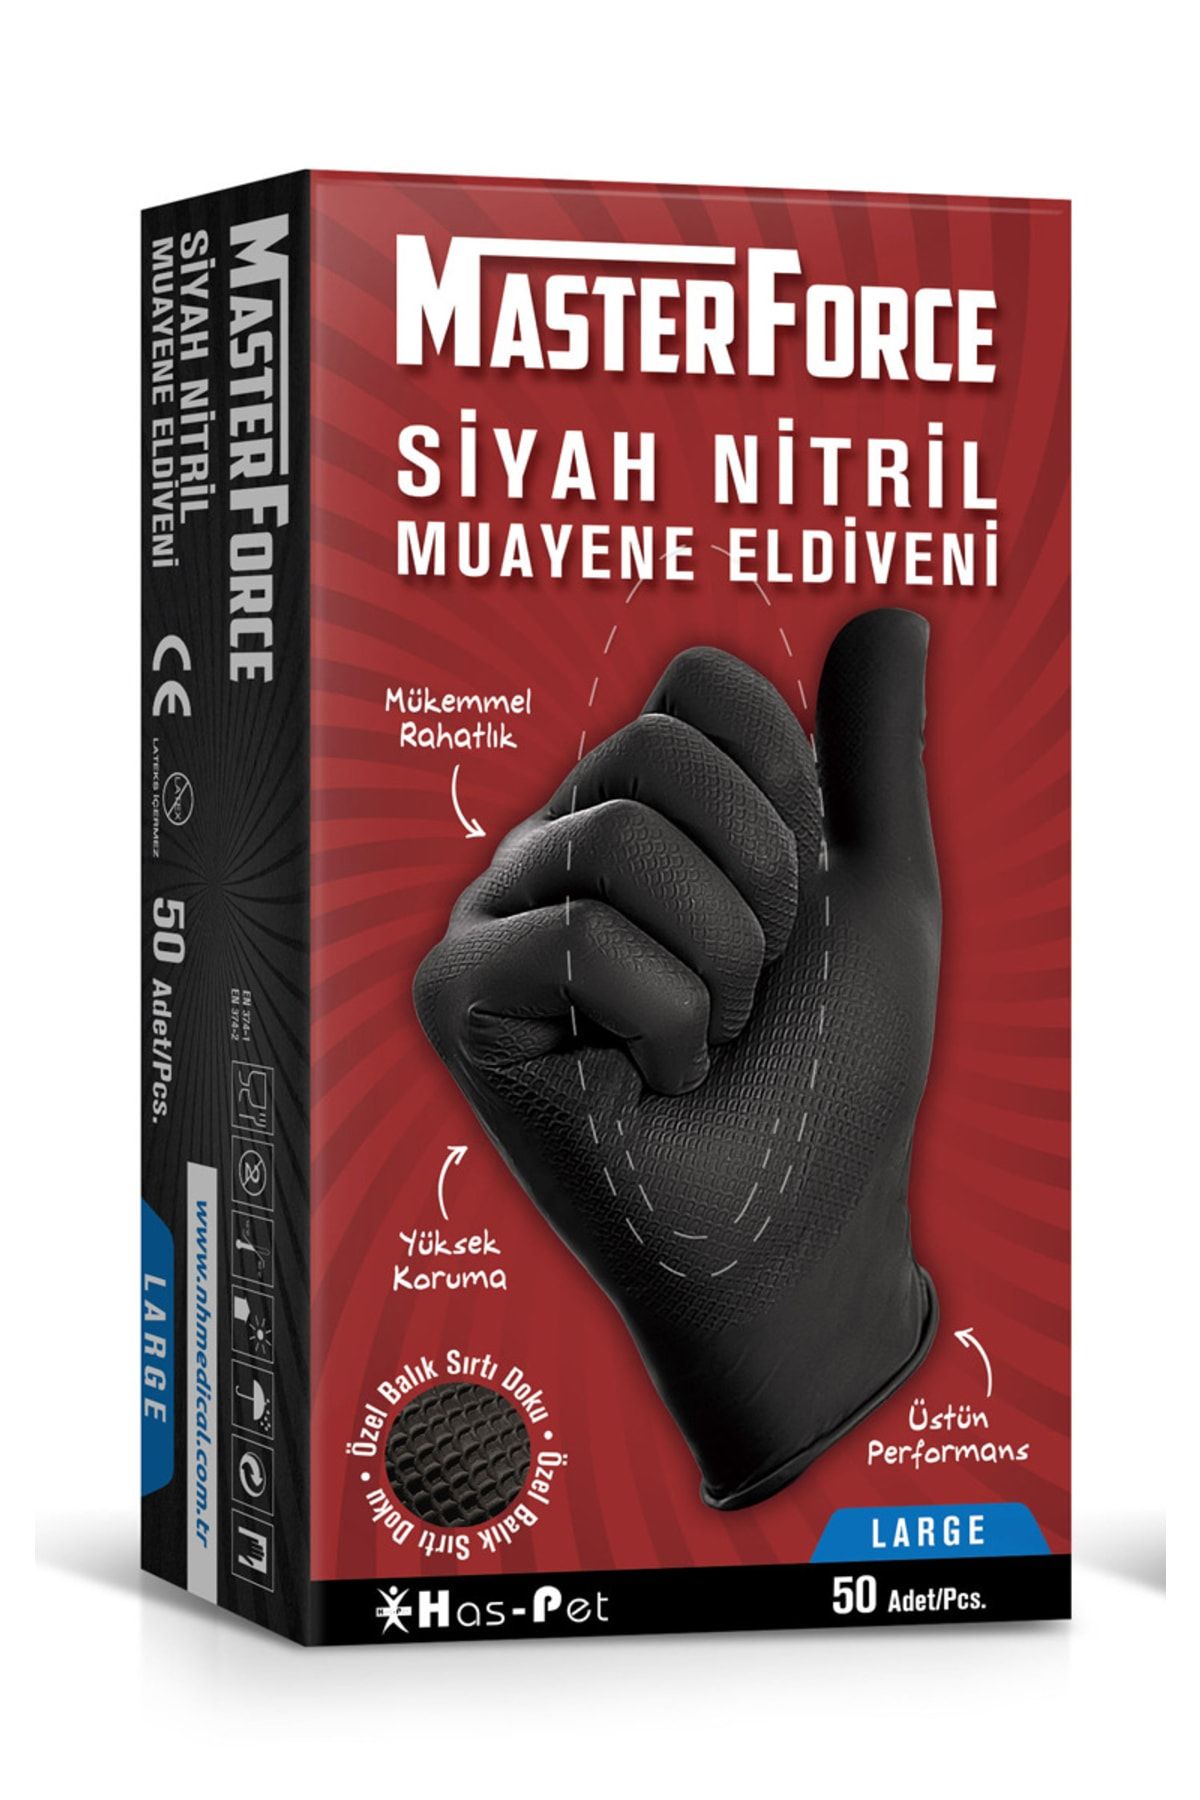 Has-Pet Haspet Masterforce Nitril Siyah Eldiven 50 Adet